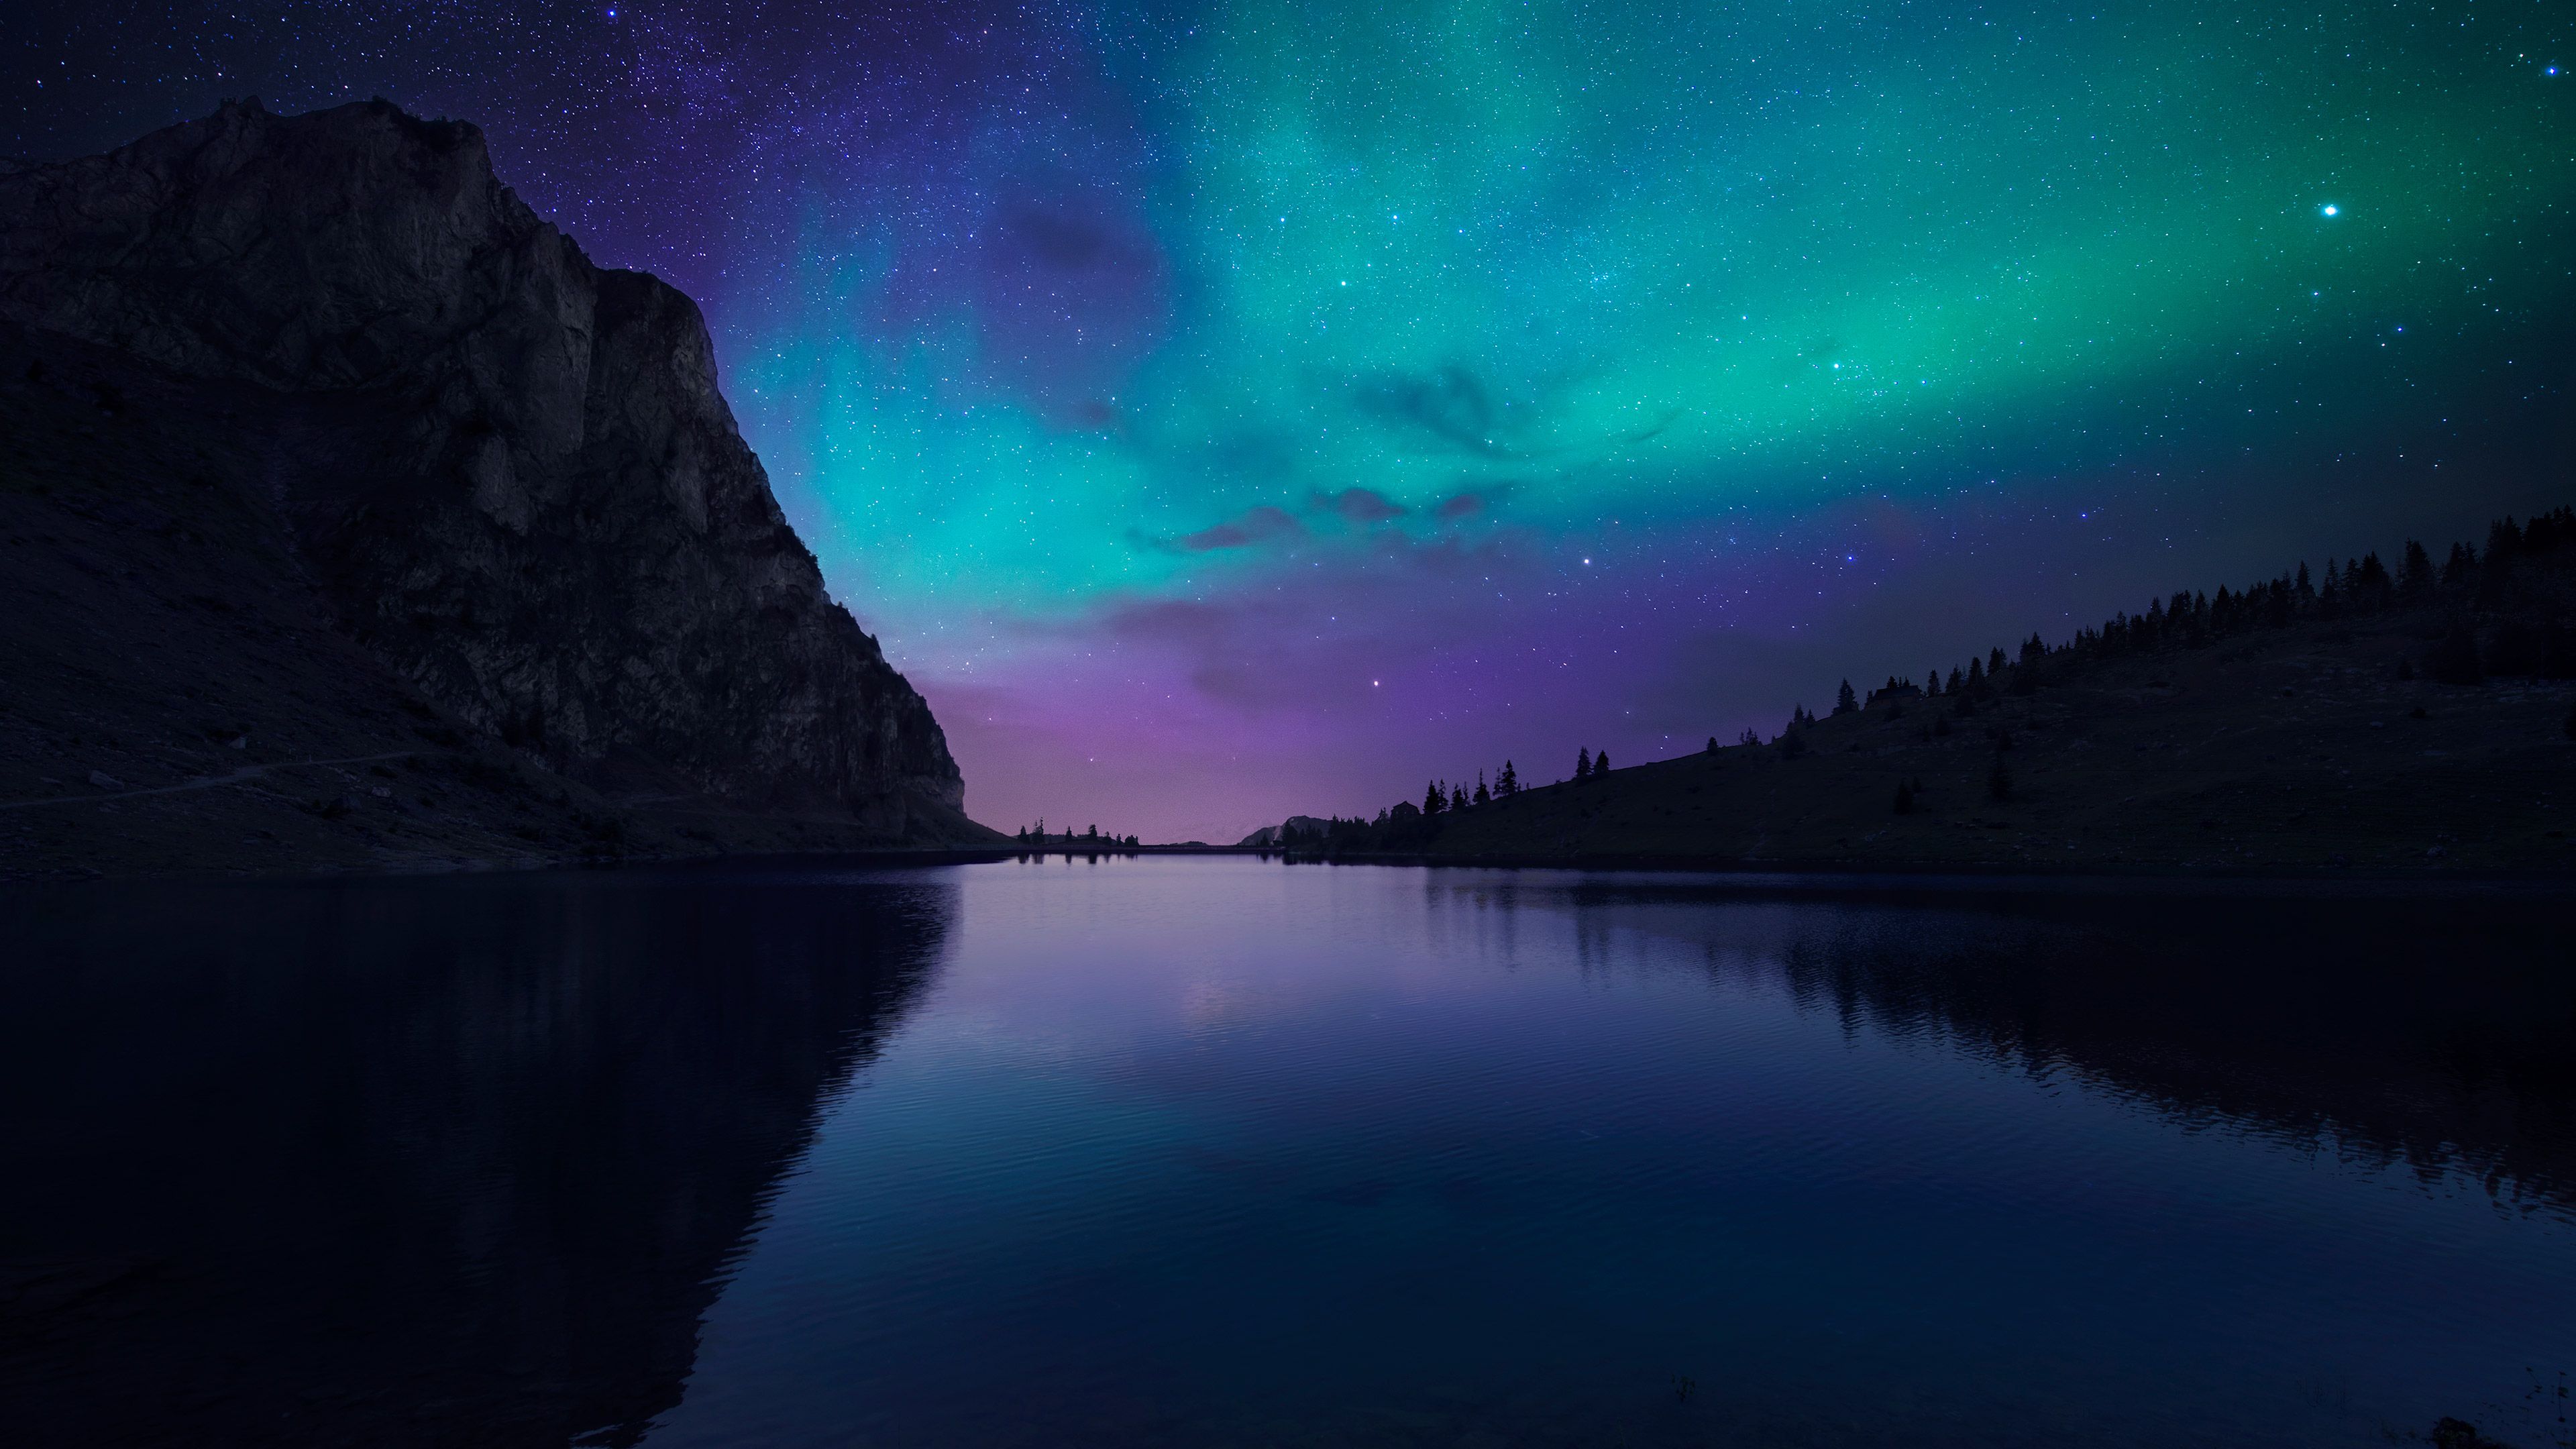 Lake Aurora, HD Nature, 4k Wallpaper, Image, Background, Photo